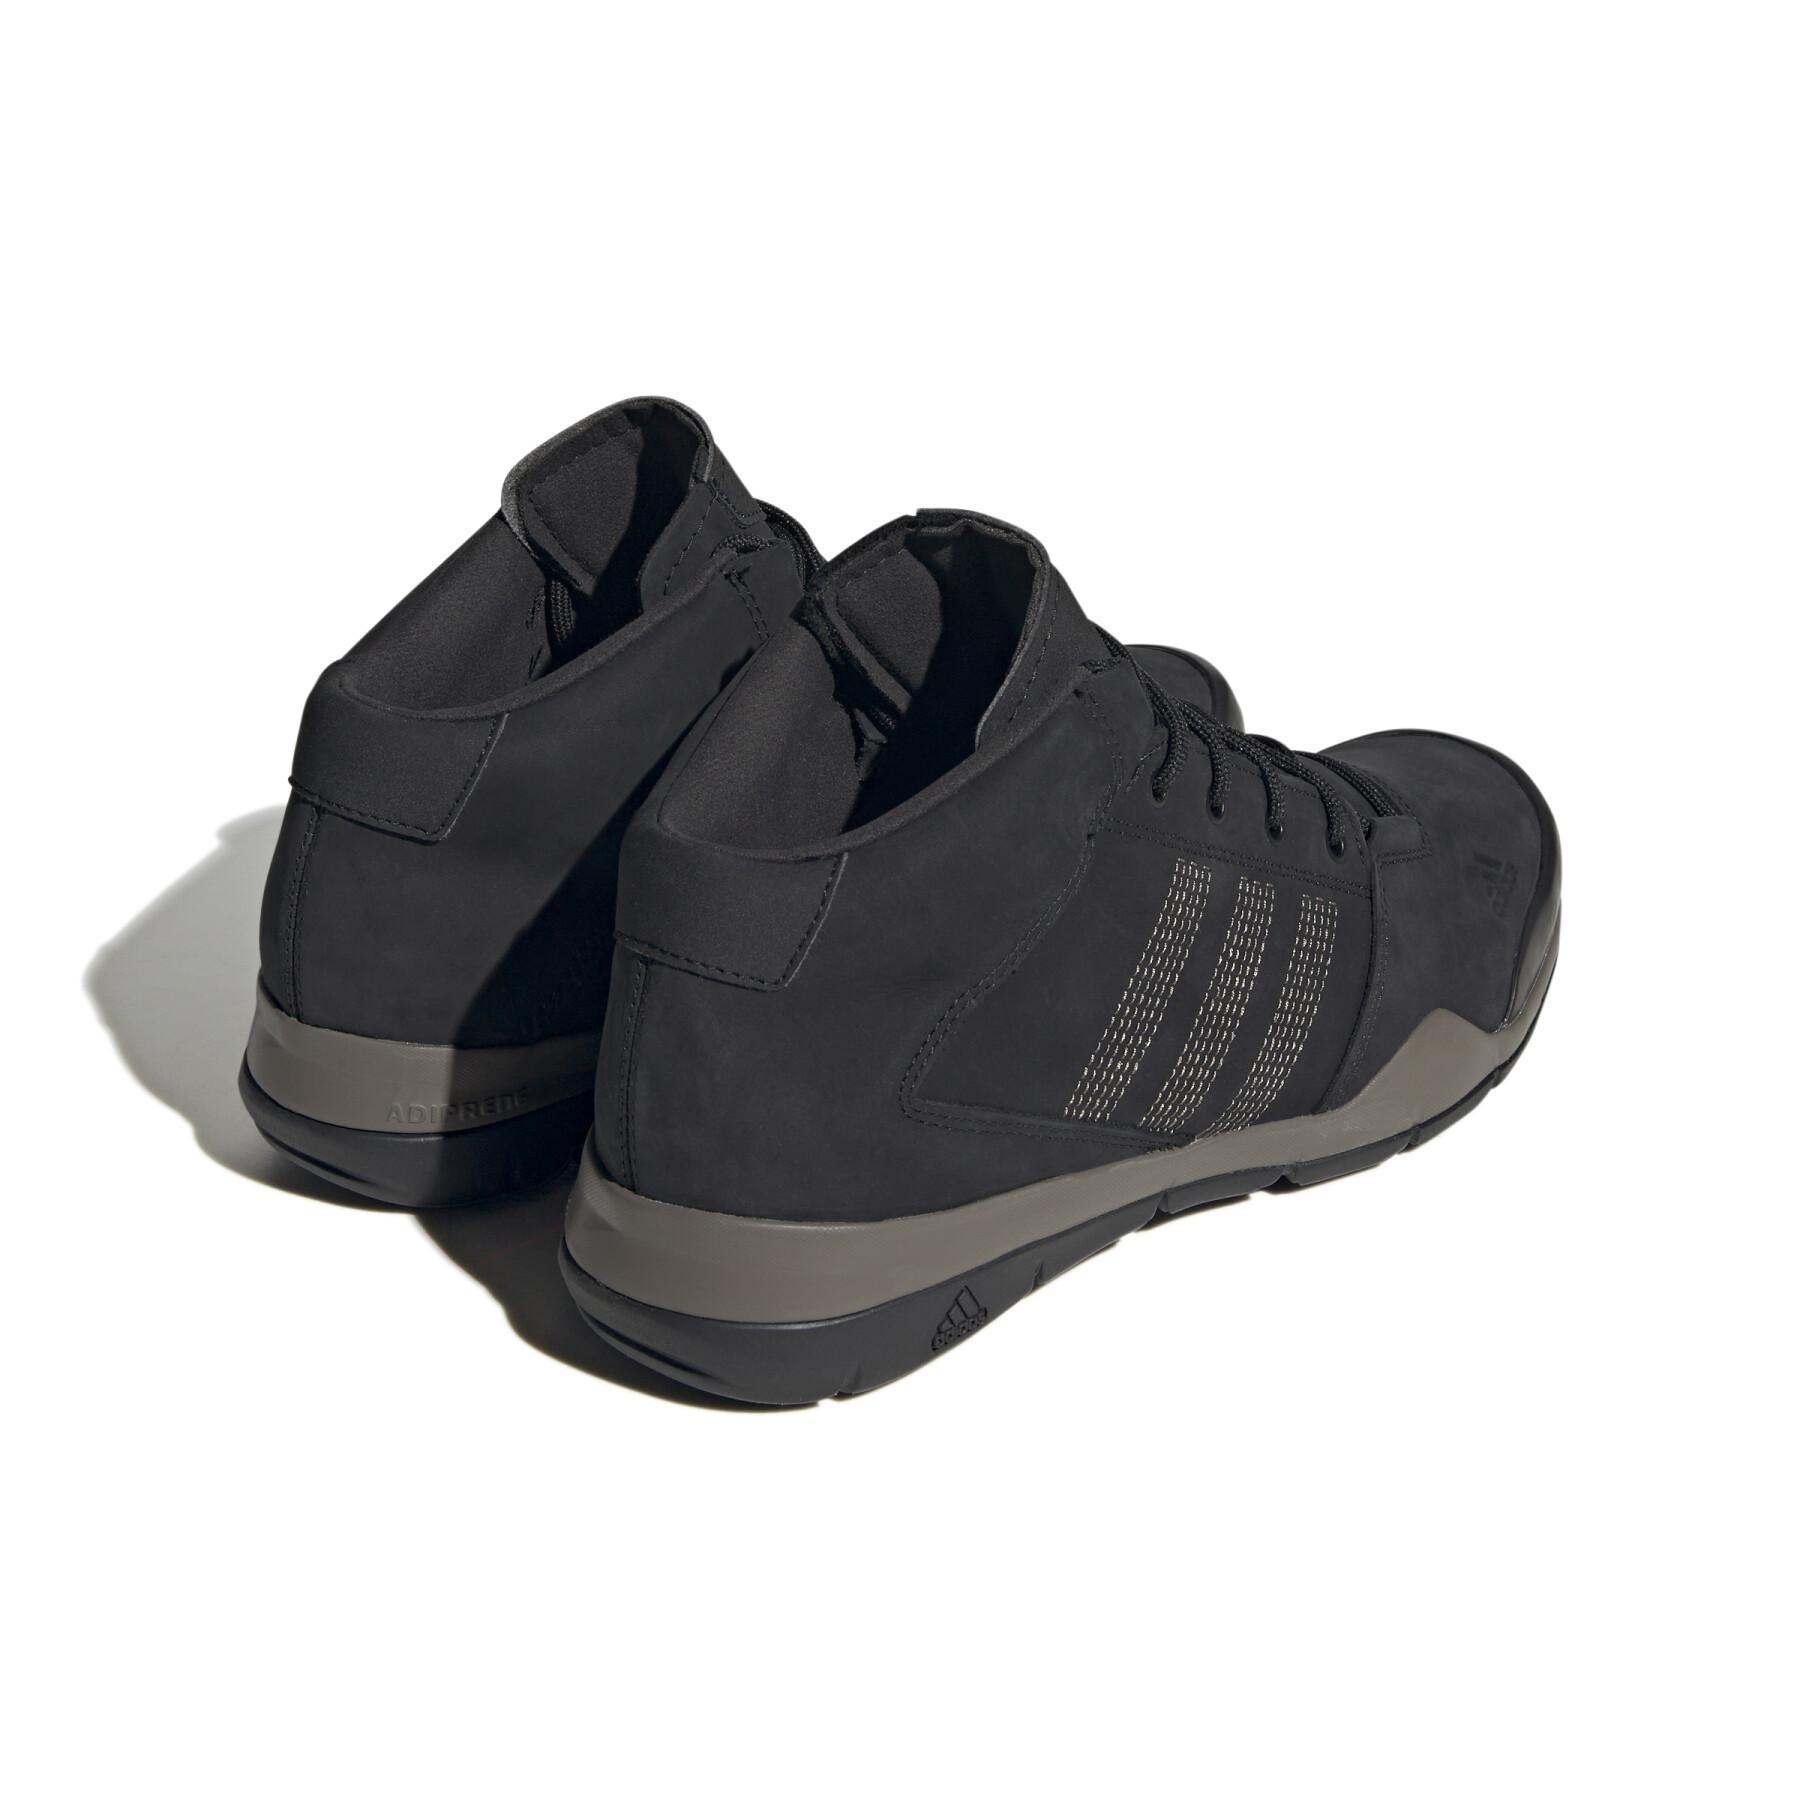 Hiking shoes adidas ANZIT DLX MID